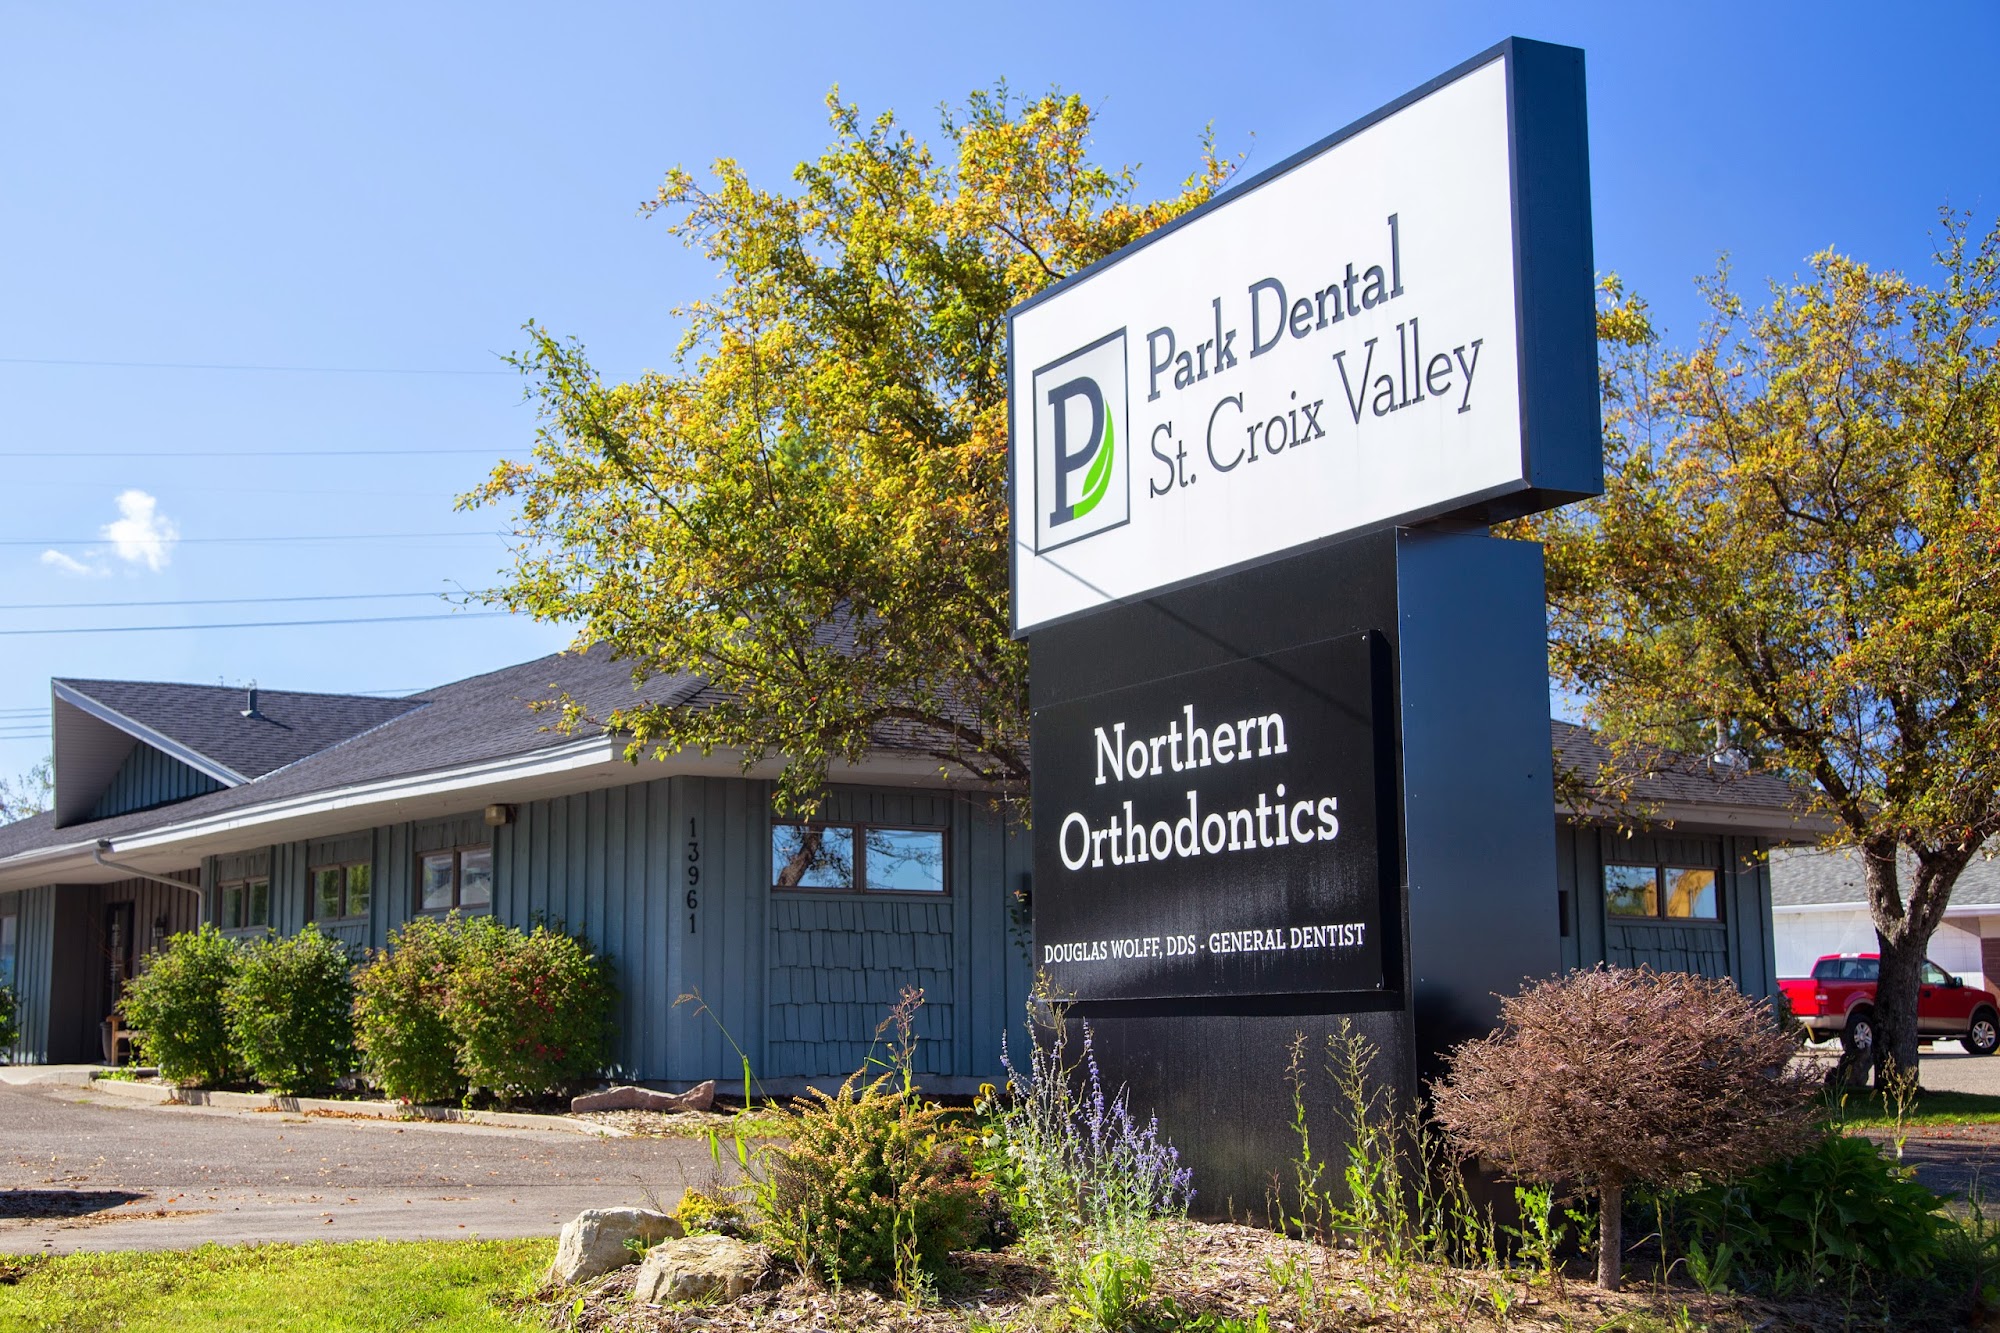 Park Dental St. Croix Valley